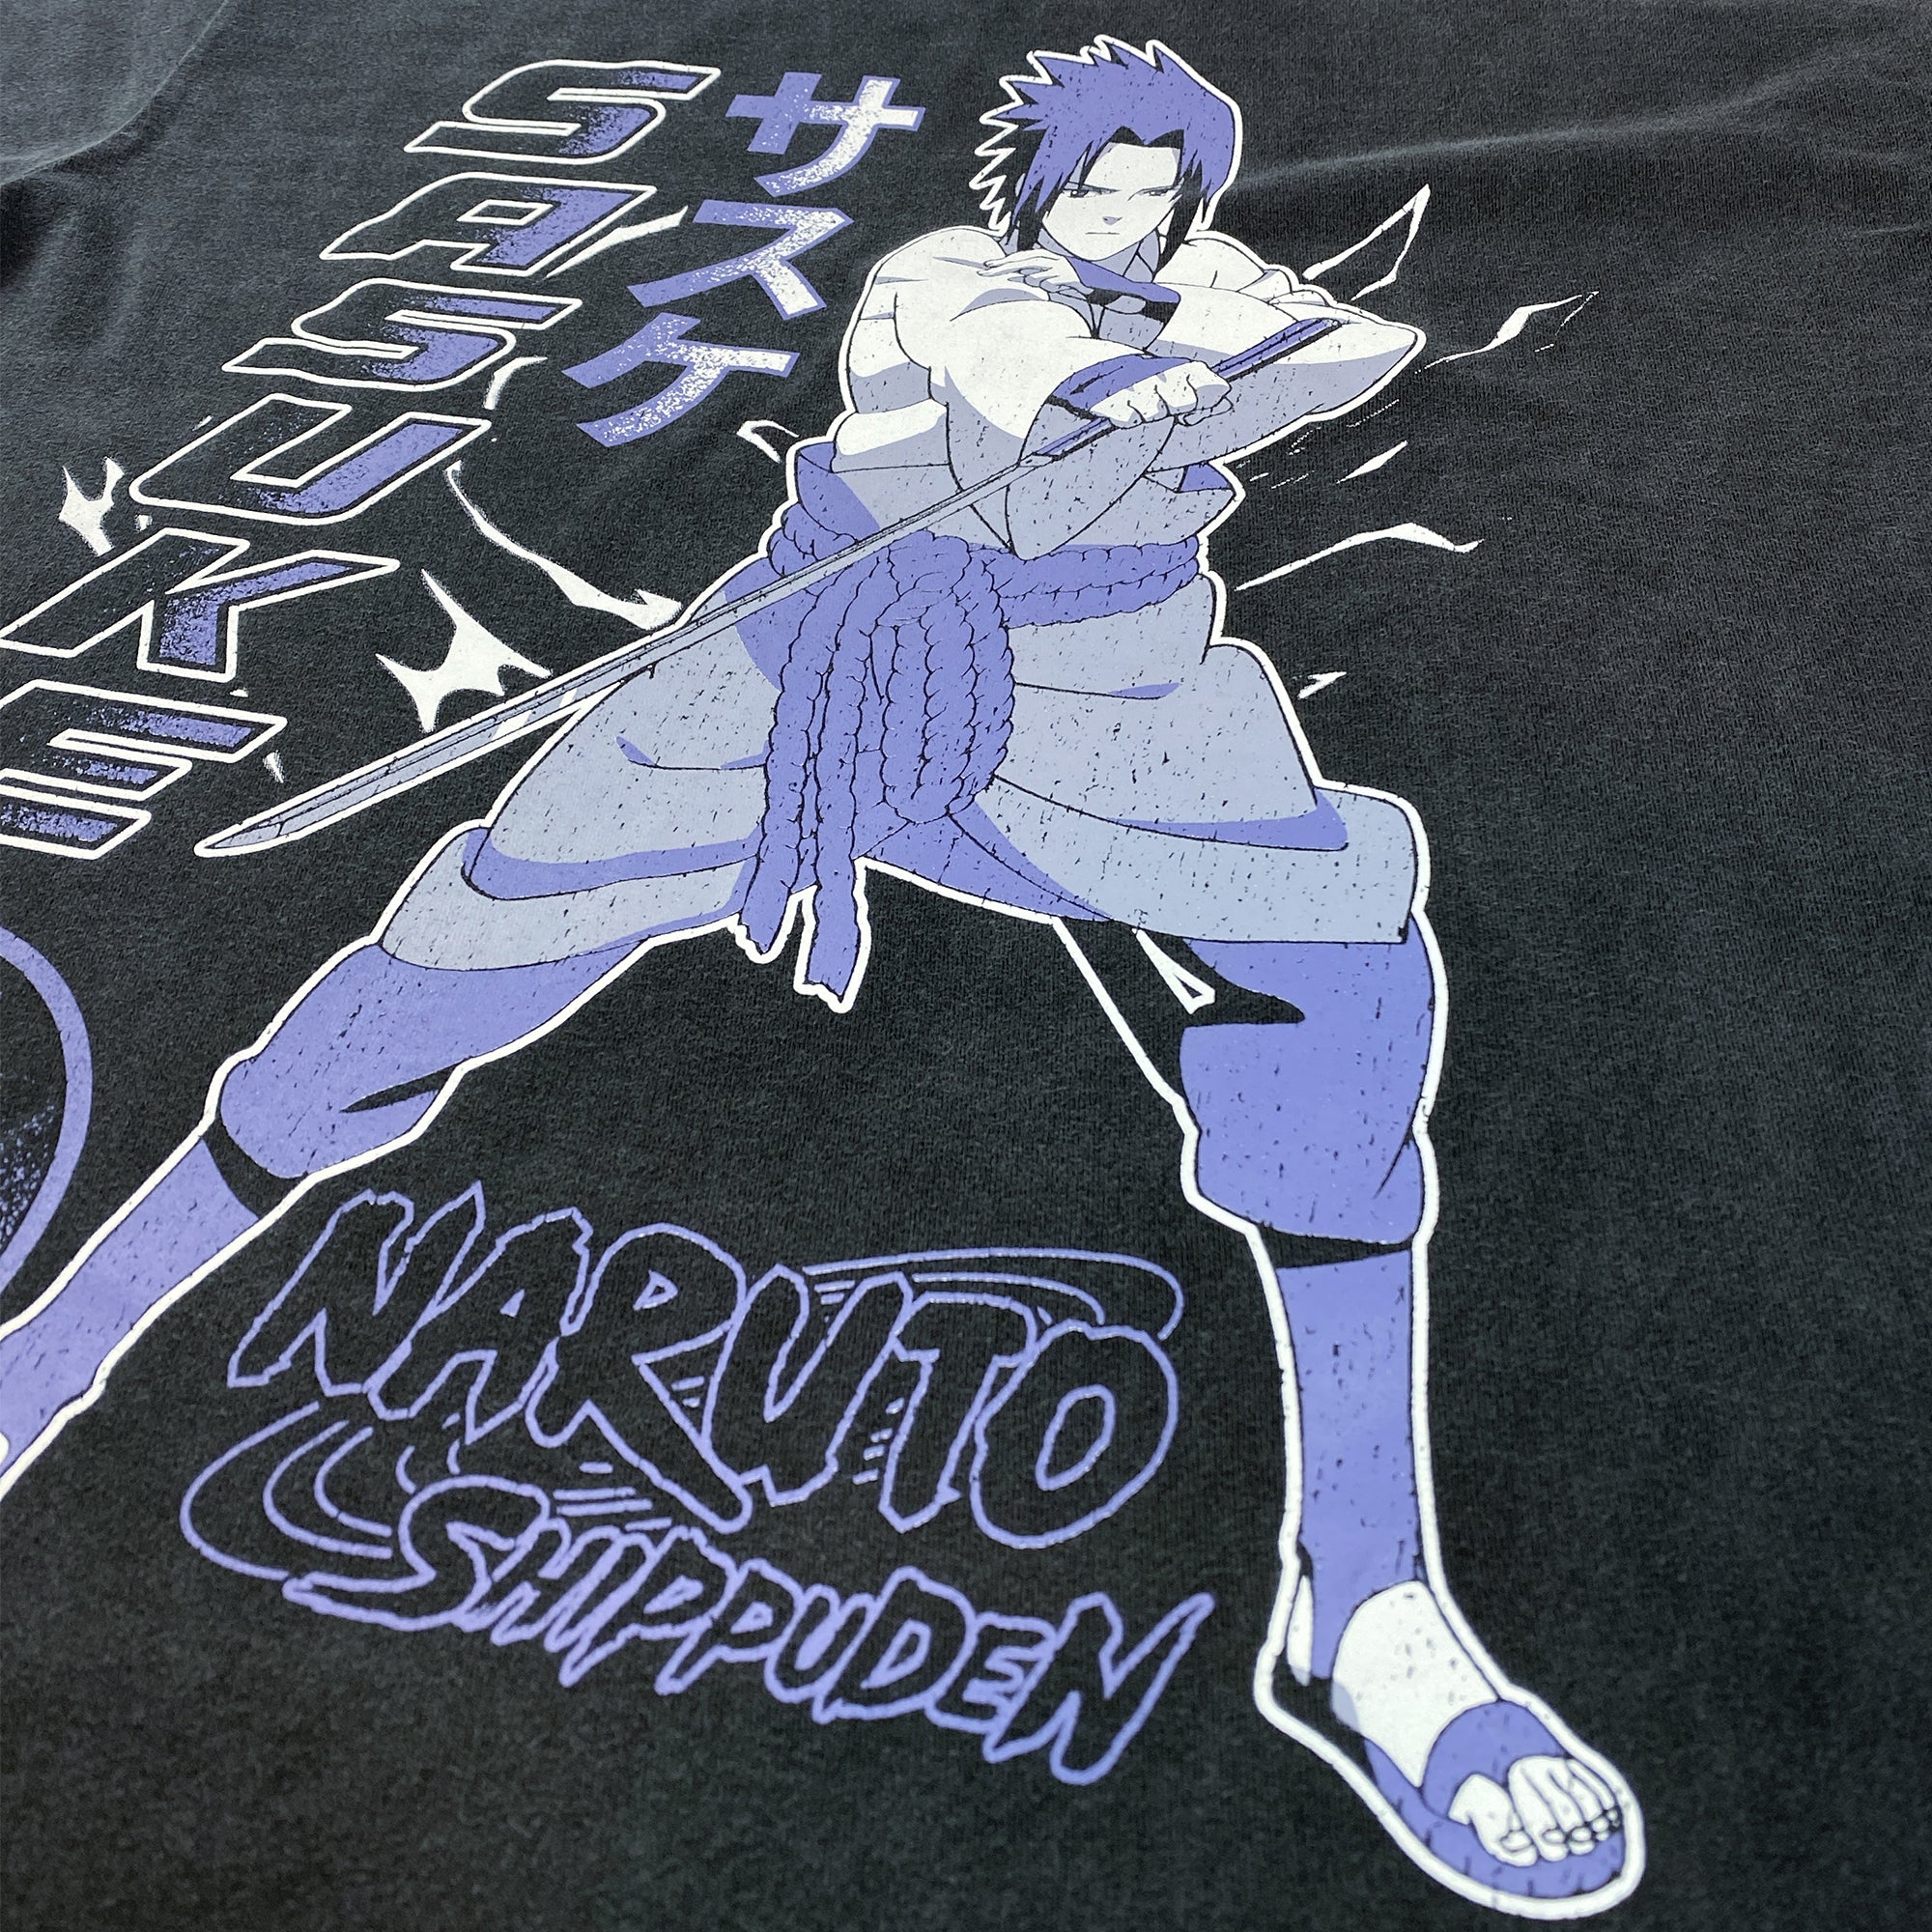 Naruto Uzumaki Shippuden Men's Crunchyroll Anime T-Shirt Black